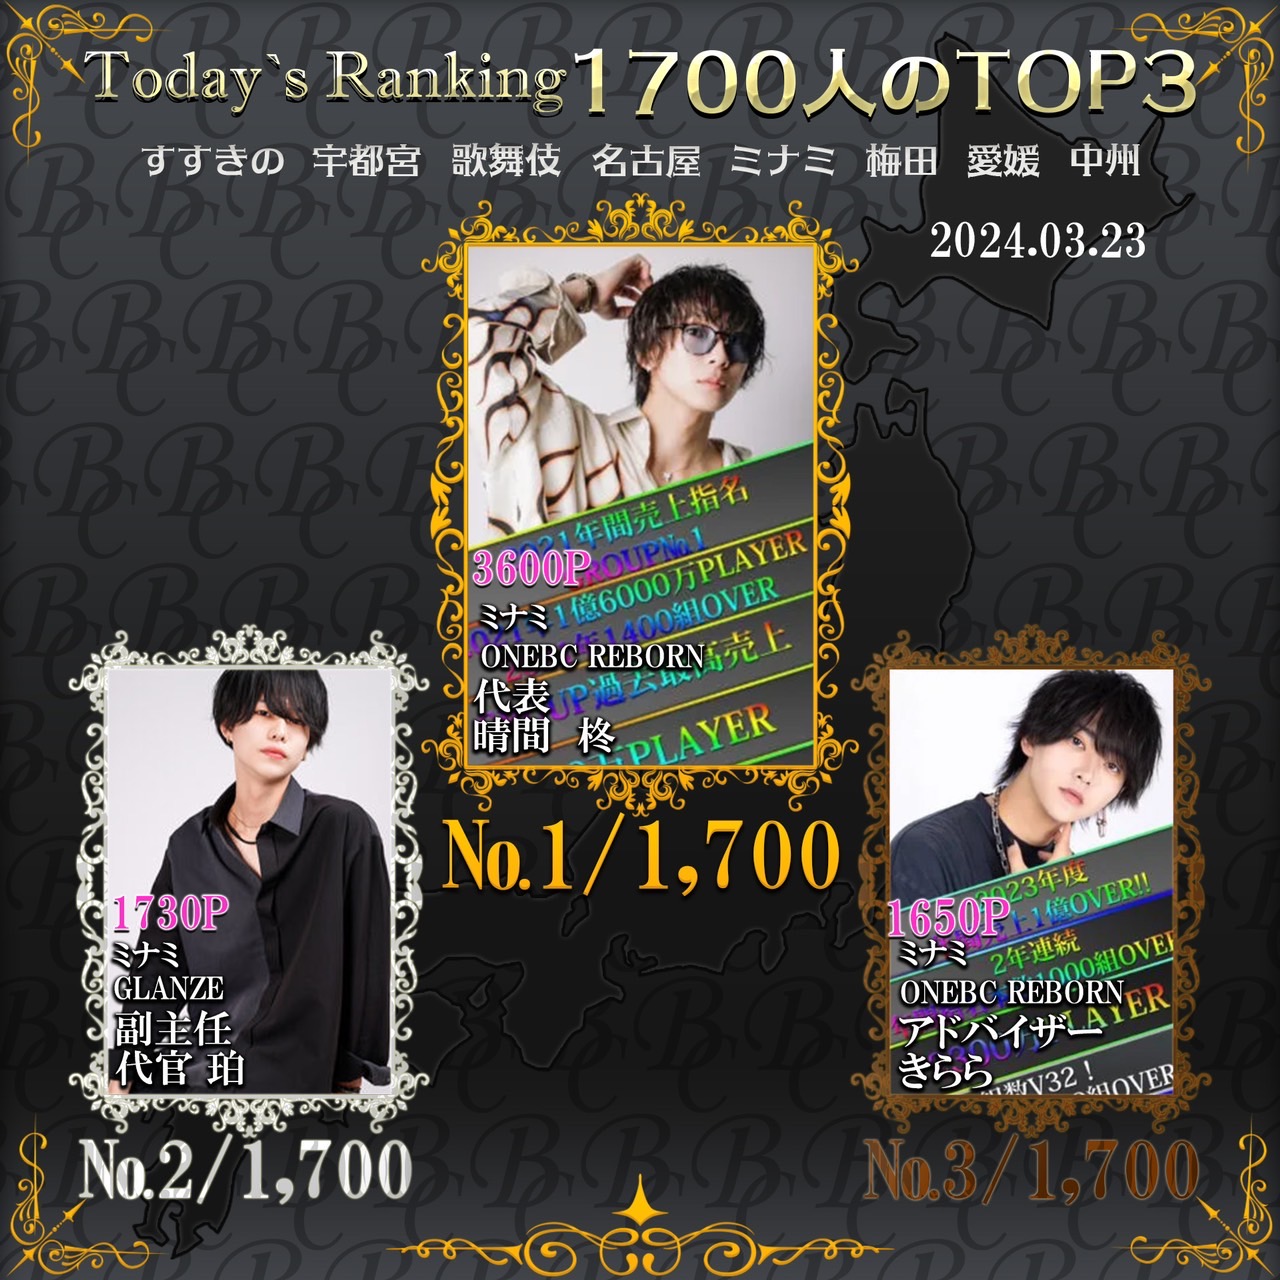 3/23 Today’s Ranking